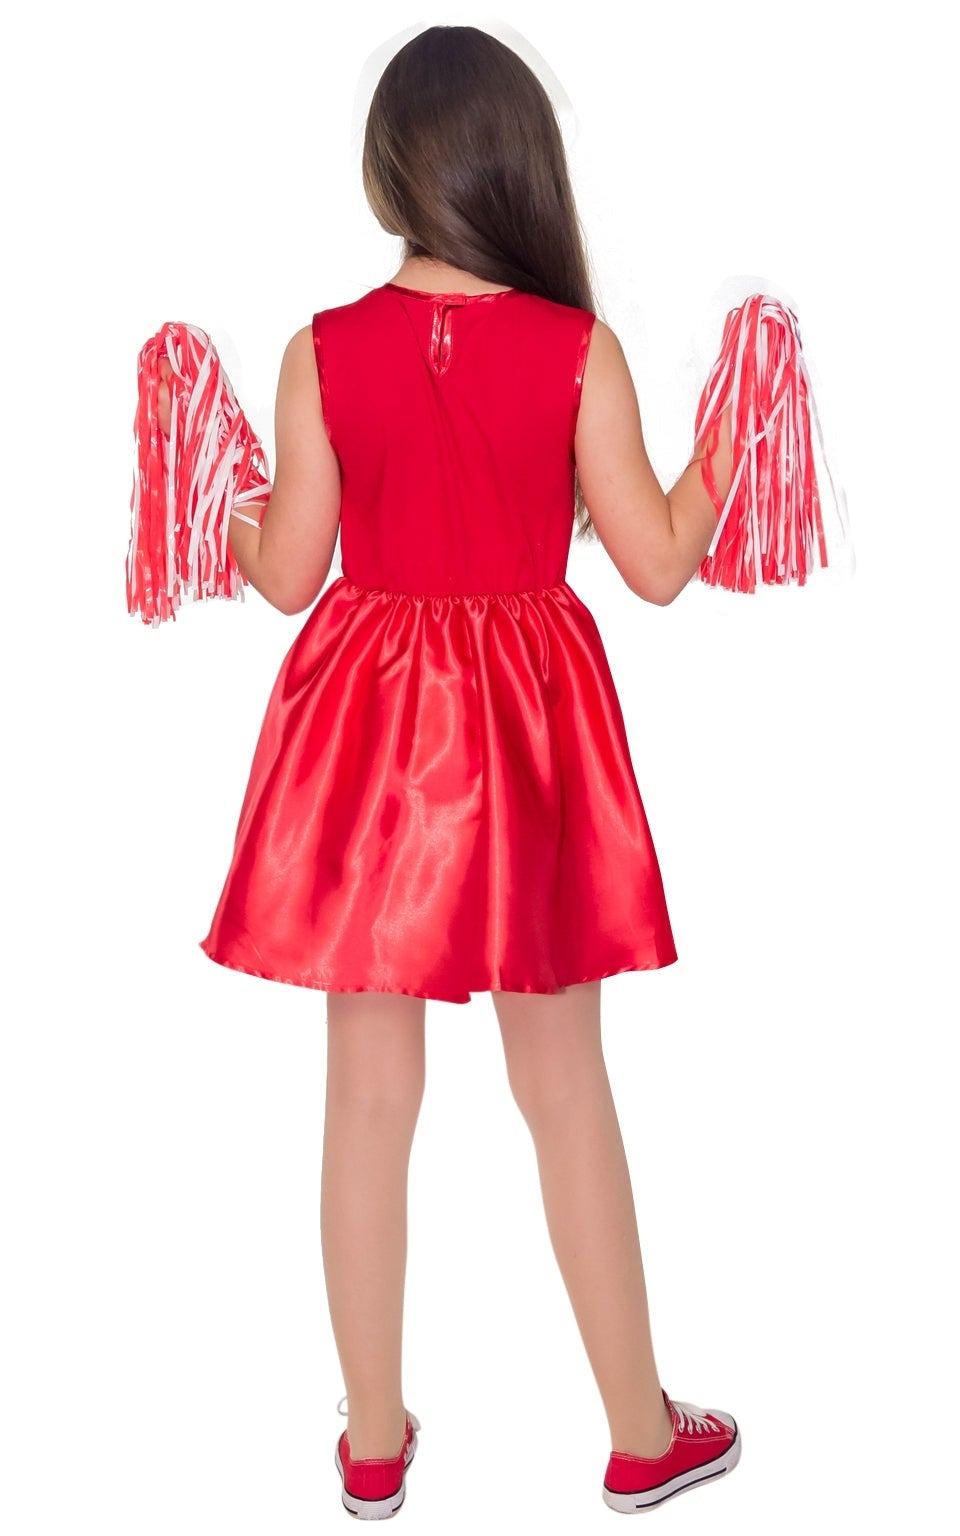 WilDCat Cheerleader Dress and Pom Poms_2 rub-3010865-6